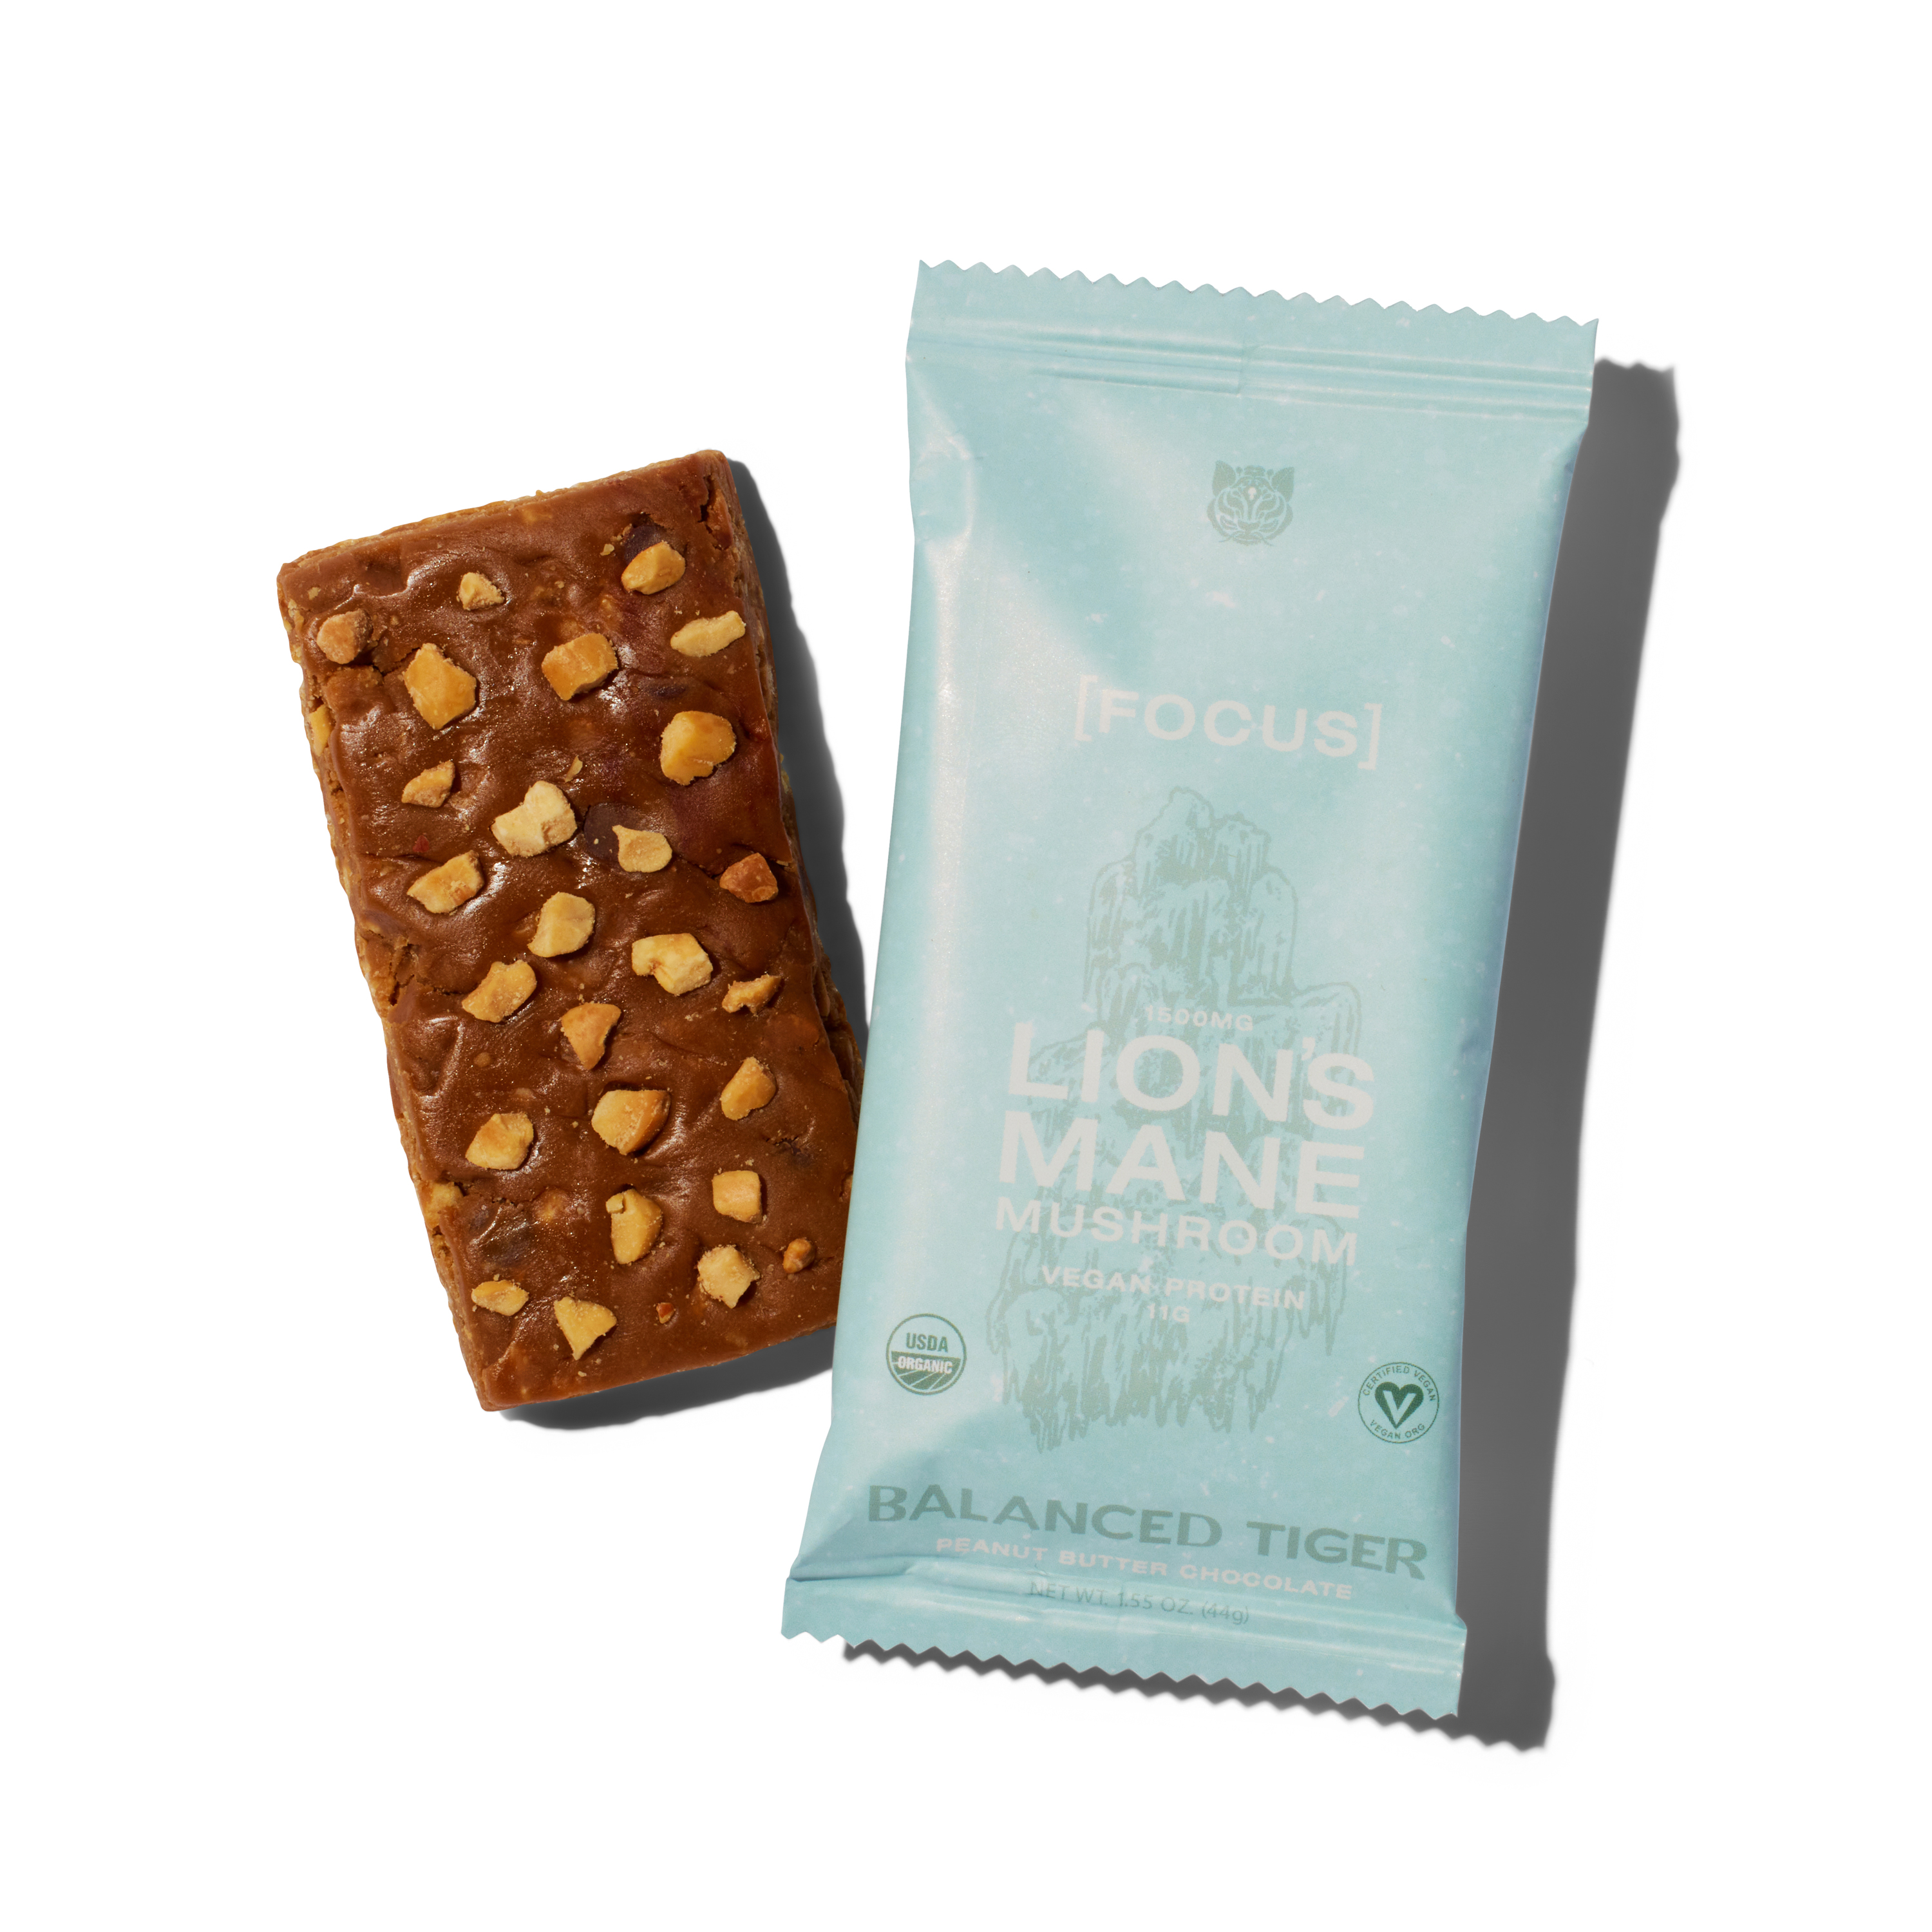 Balanced Tiger [Focus] Lion's Mane Peanut Butter Chocolate Protein Bar 16 innerpacks per case 1.6 oz